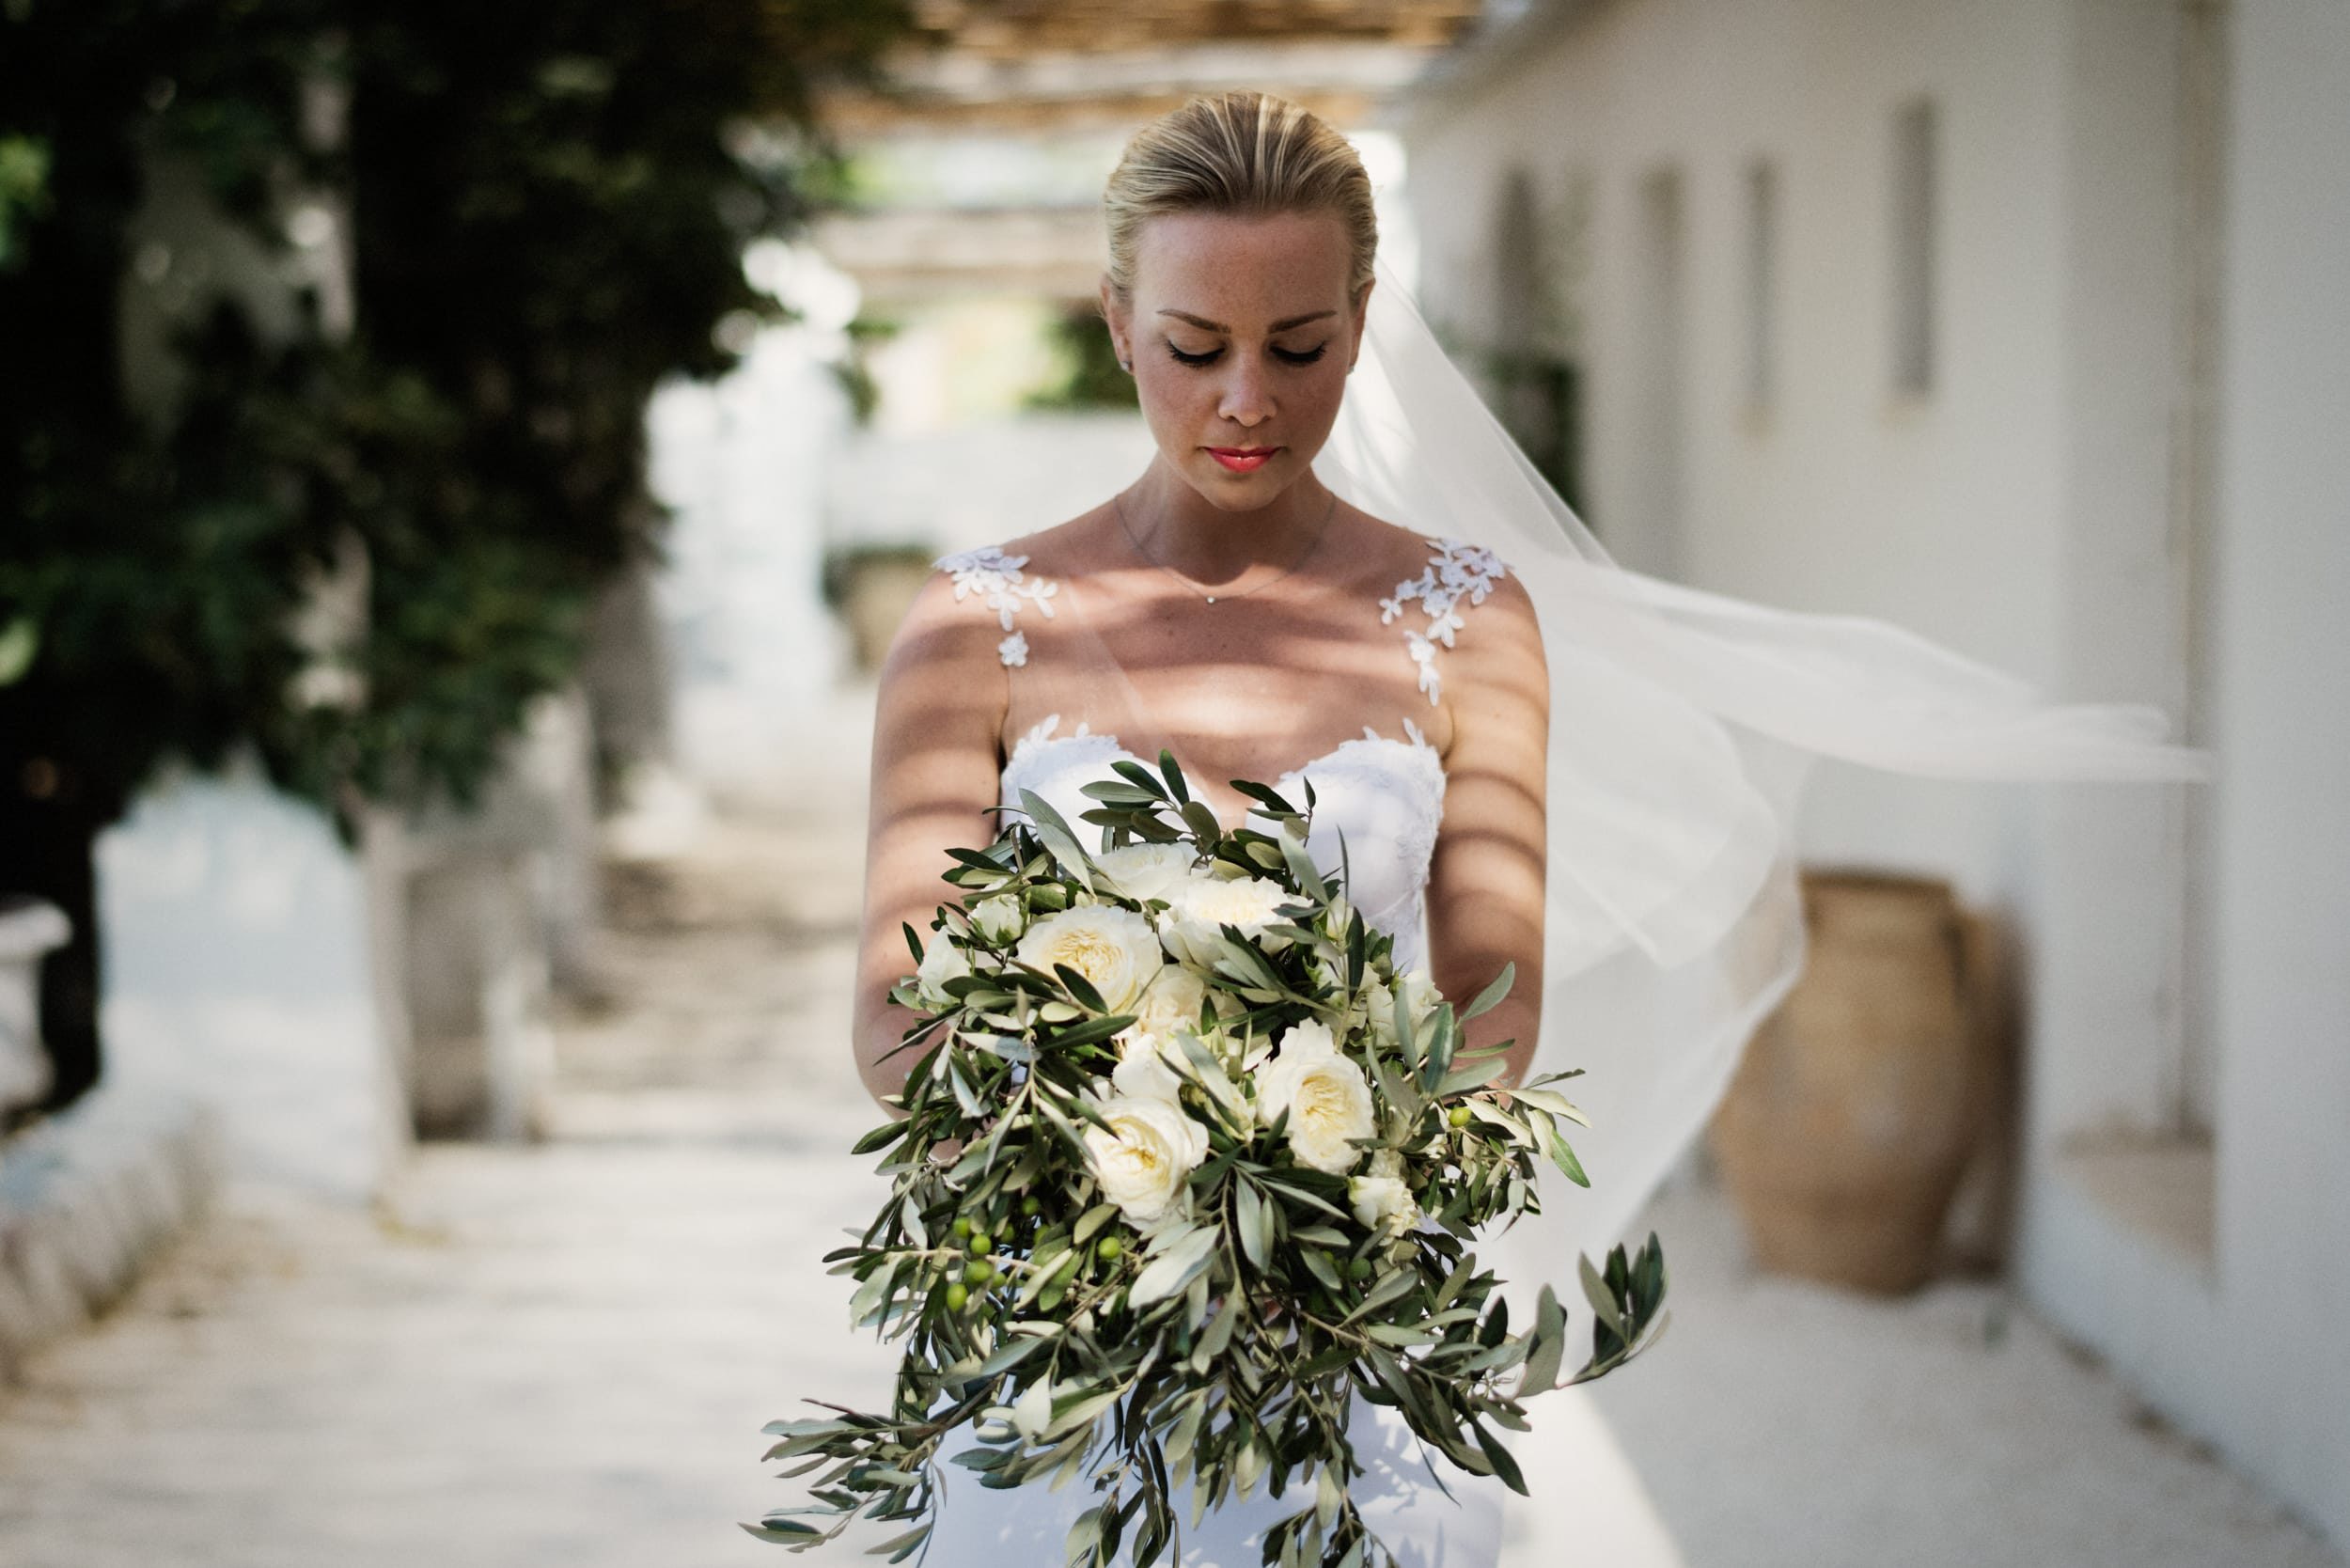 Duepunti Wedding Photography - Fine art photographers in Italy